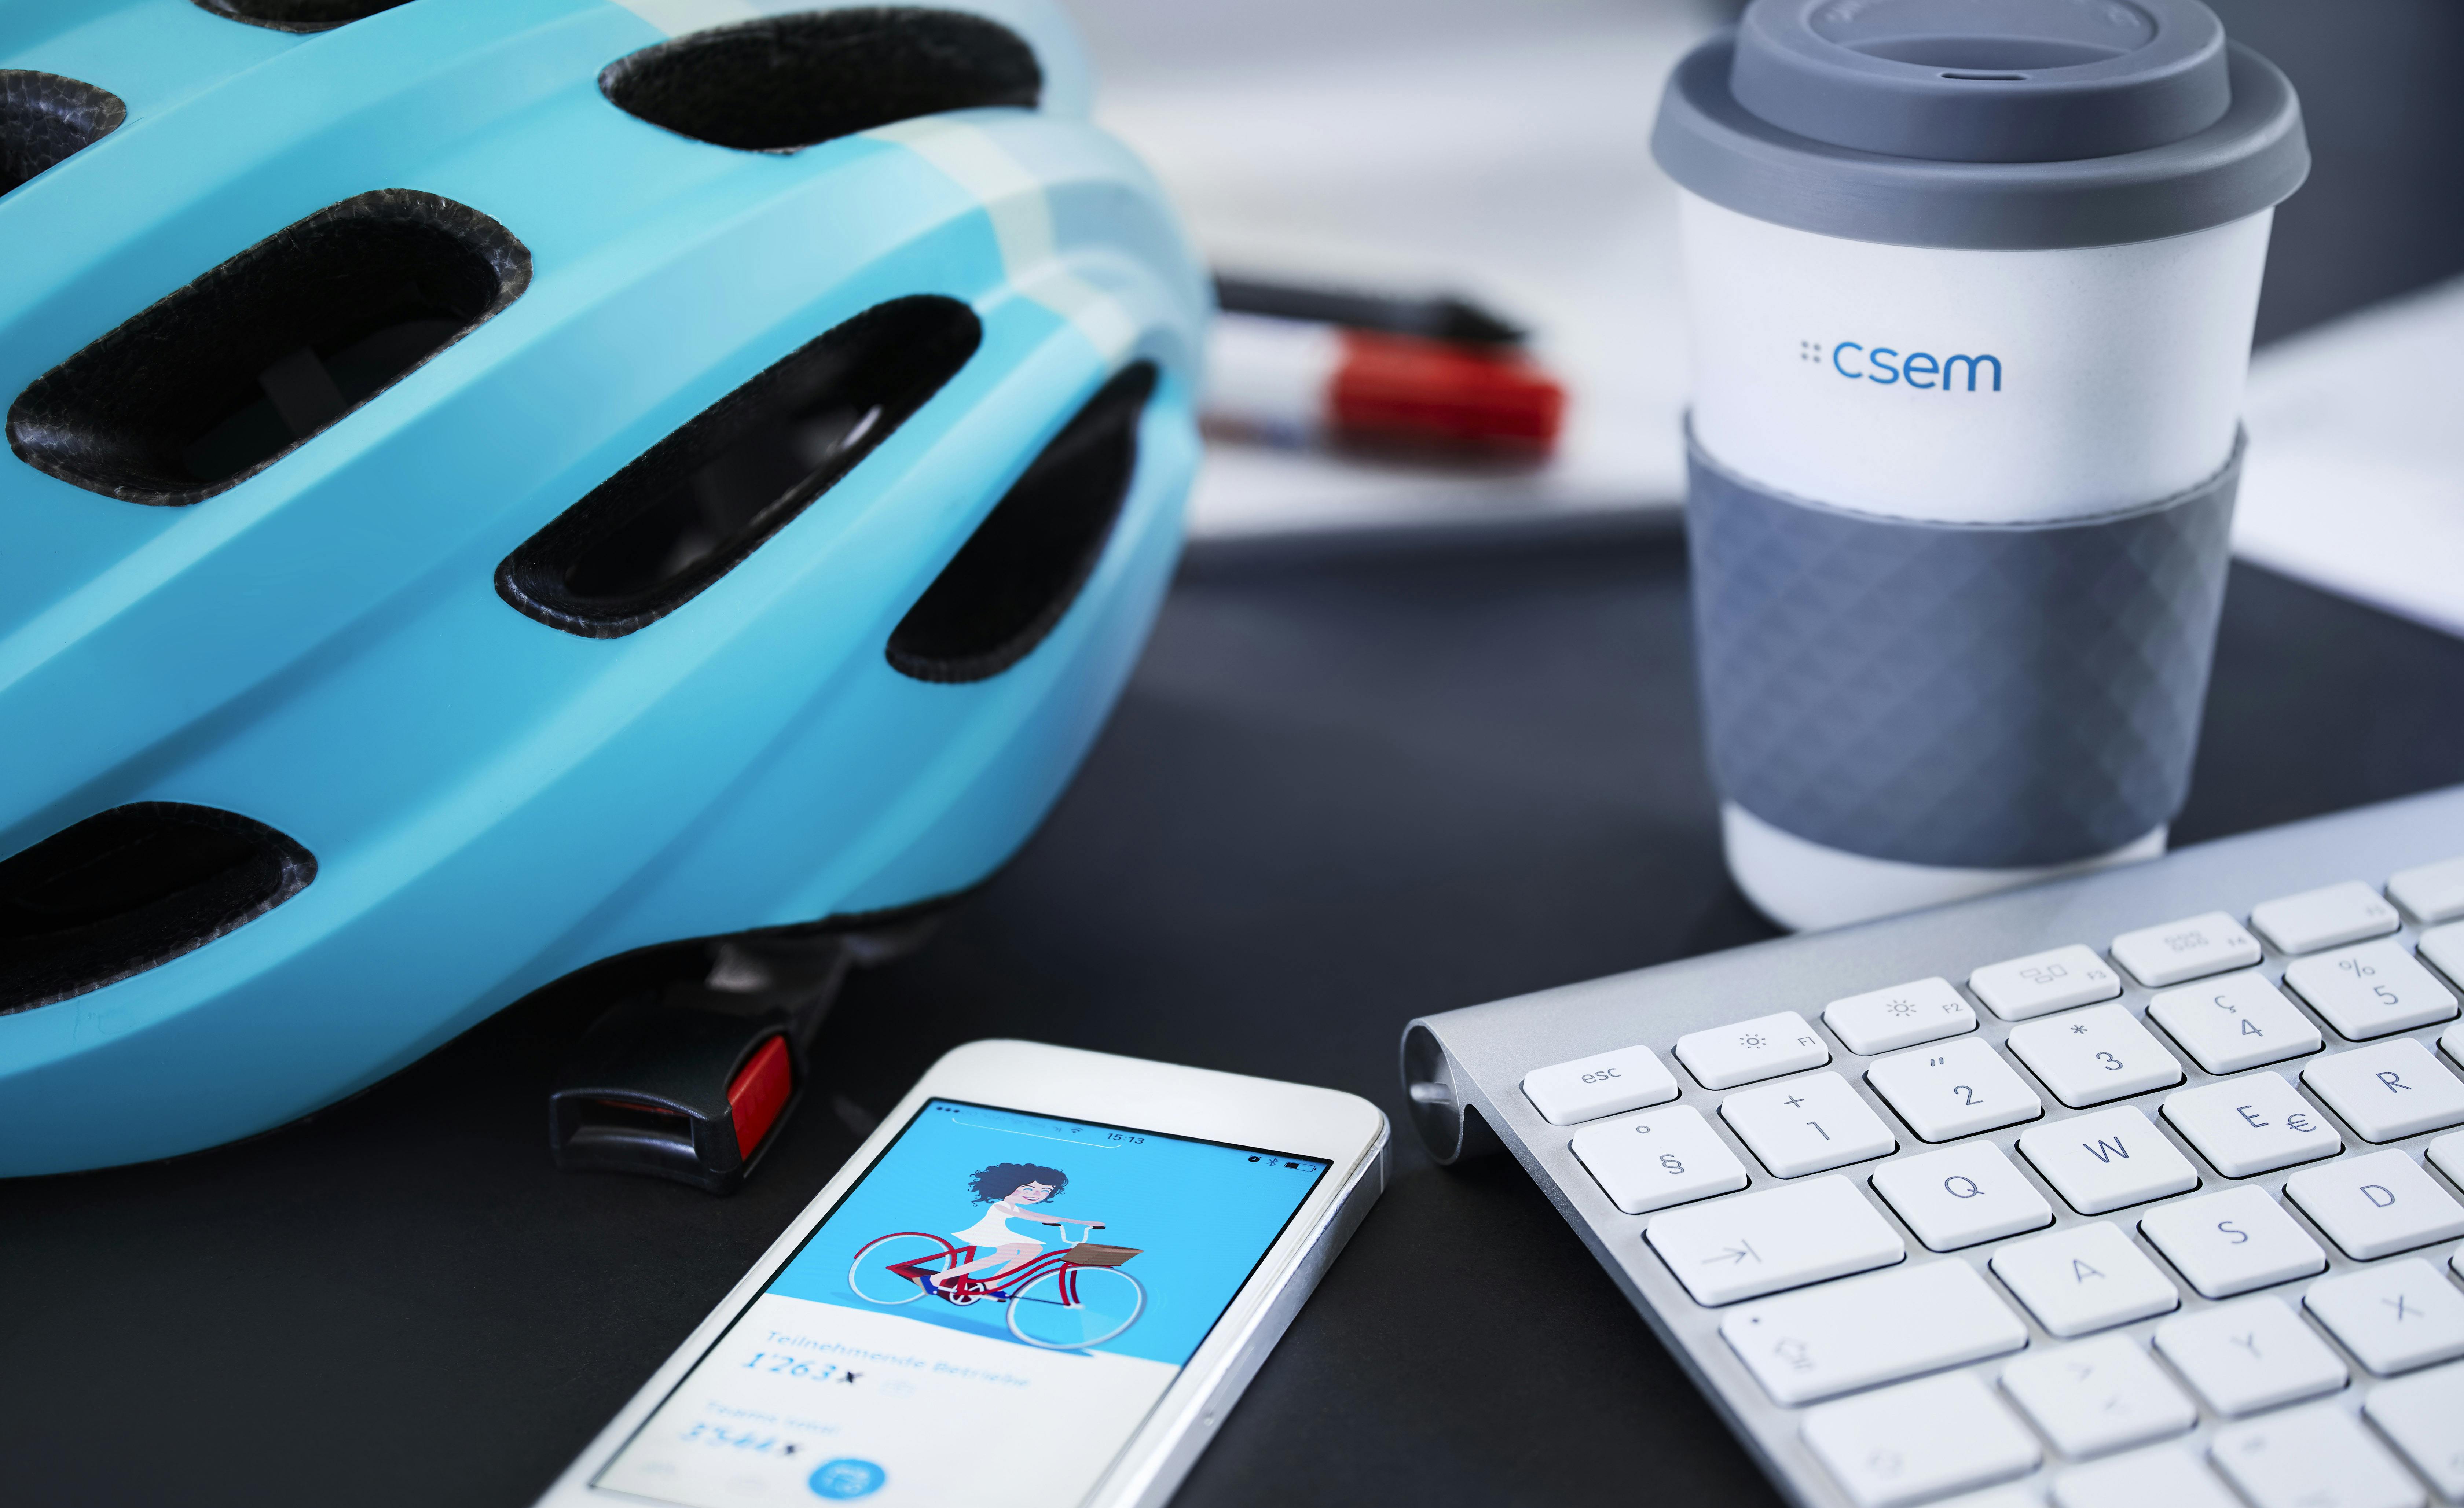 Smartphone, keyboard, cup and helmet on a CSEM desk 